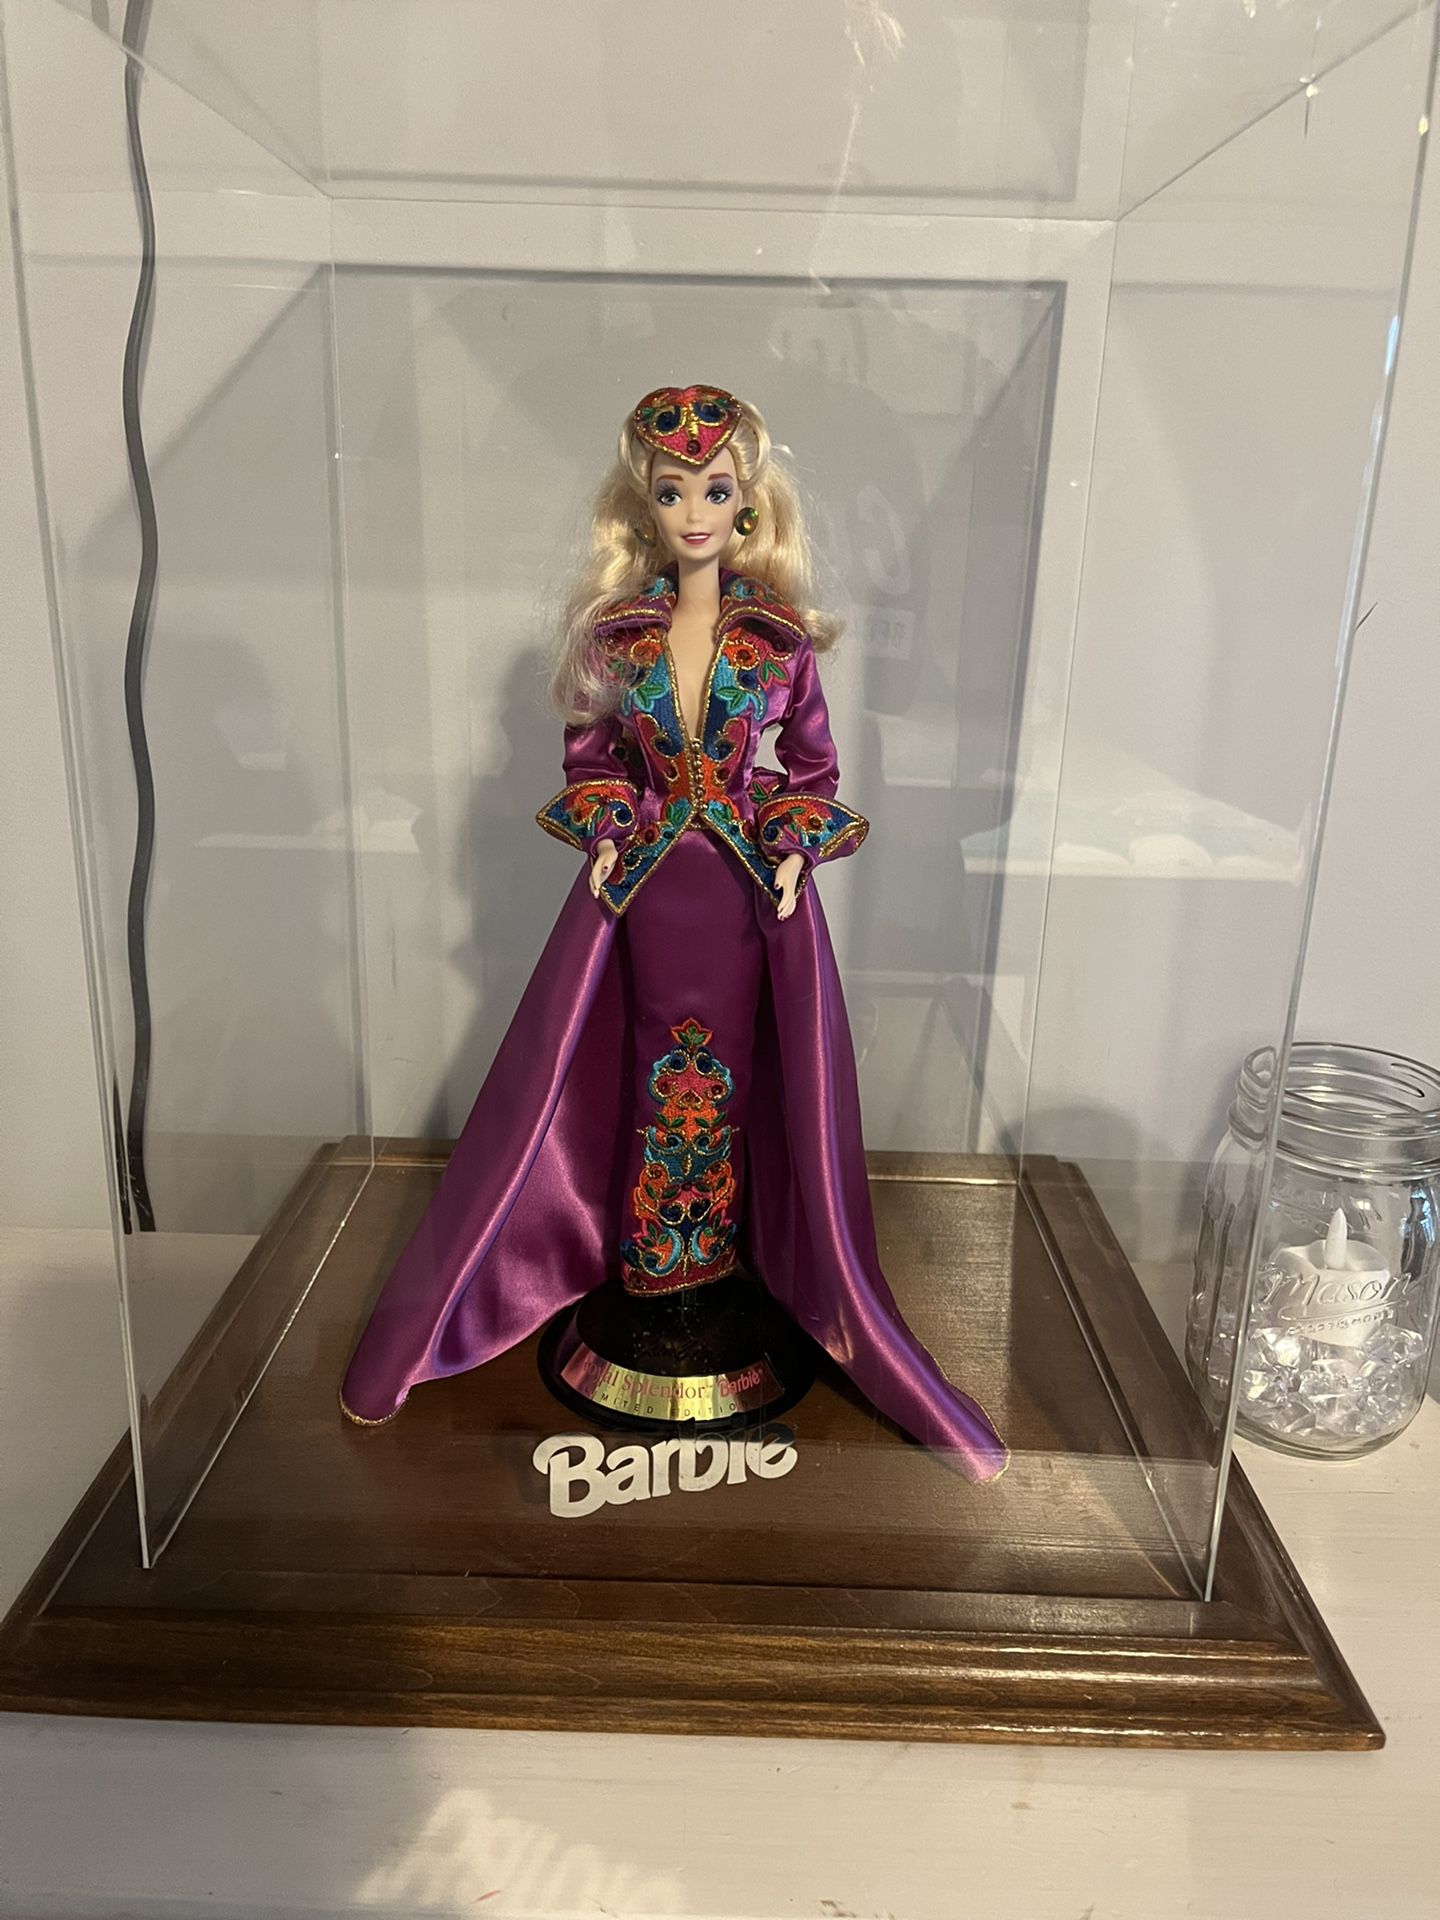 Royal Splendor Bob Mackie Porcelain Barbie for Sale in Seymour, CT - OfferUp